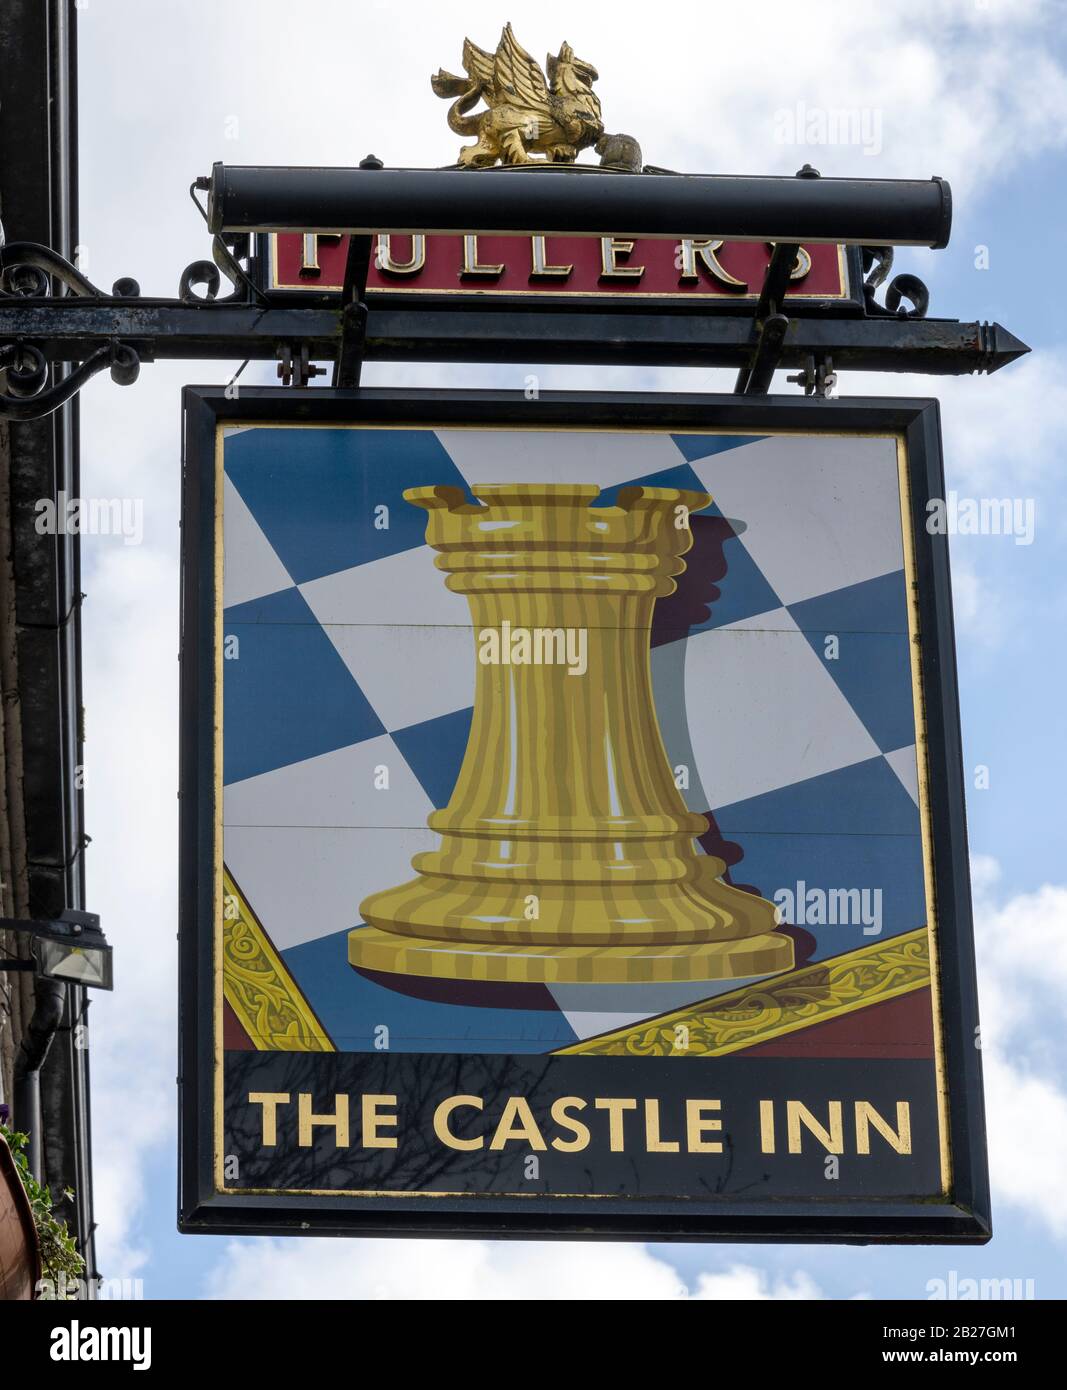 Handing pub sign - The Castle Inn - A Fullers public house - Finchdean Road, Rowlands Castle, Hampshire, England, UK Stock Photo